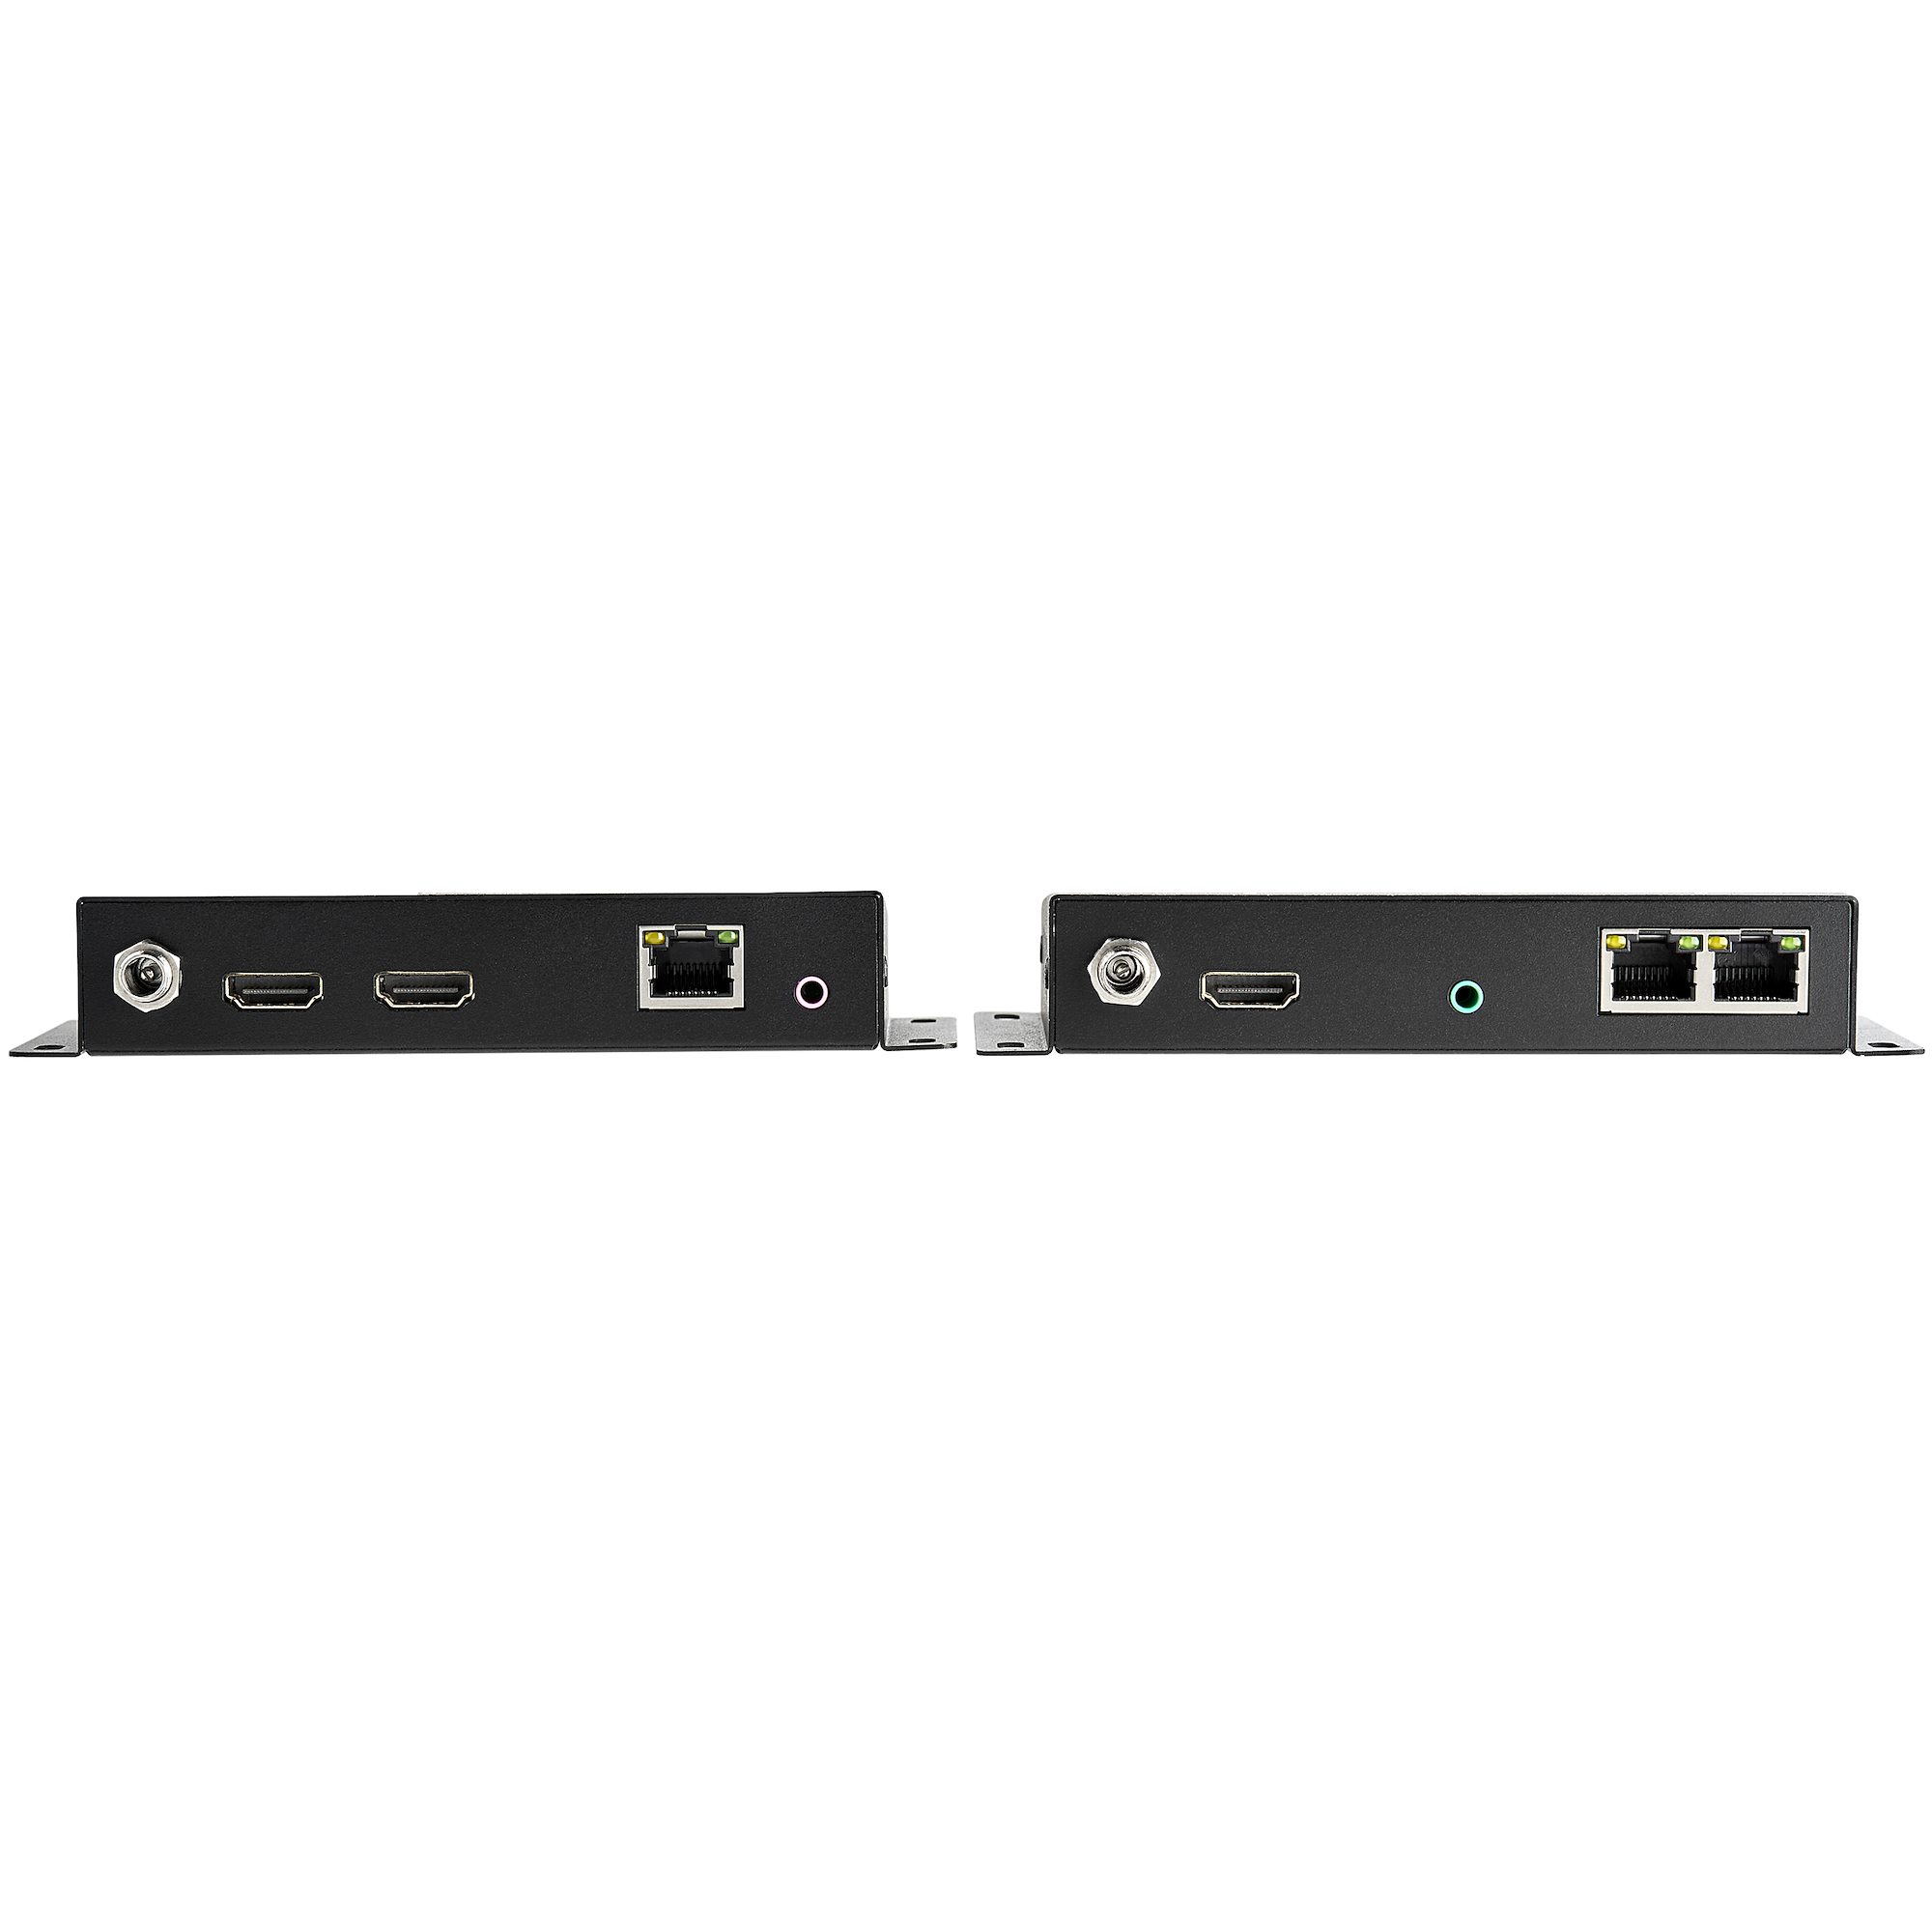 IP対応HDMIエクステンダー 1080p/60Hz HDMI延長器 スイッチ経由LAN/Ethernet対応エクステンダ 送信機/受信機セット  150m延長 Cat5e/Cat6ケーブル使用